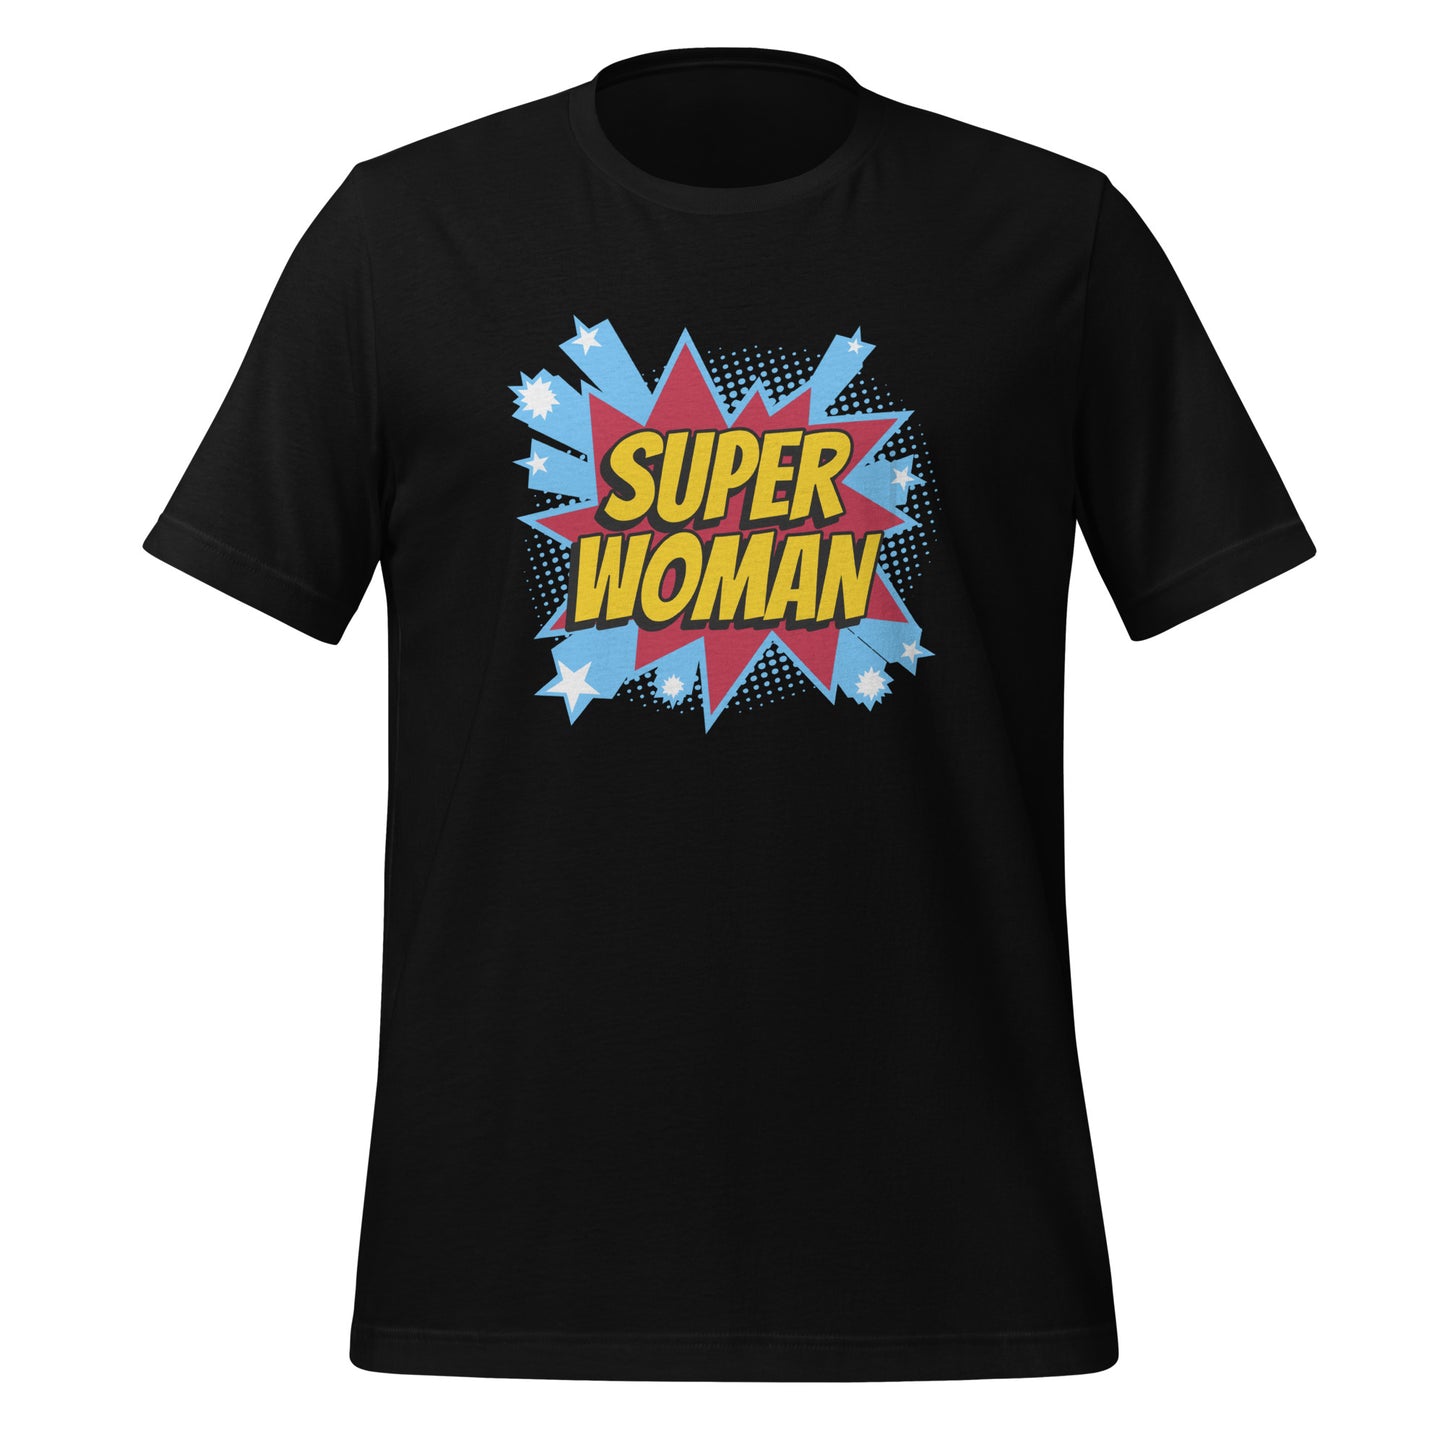 SUPER WOMAN Adult T-shirt